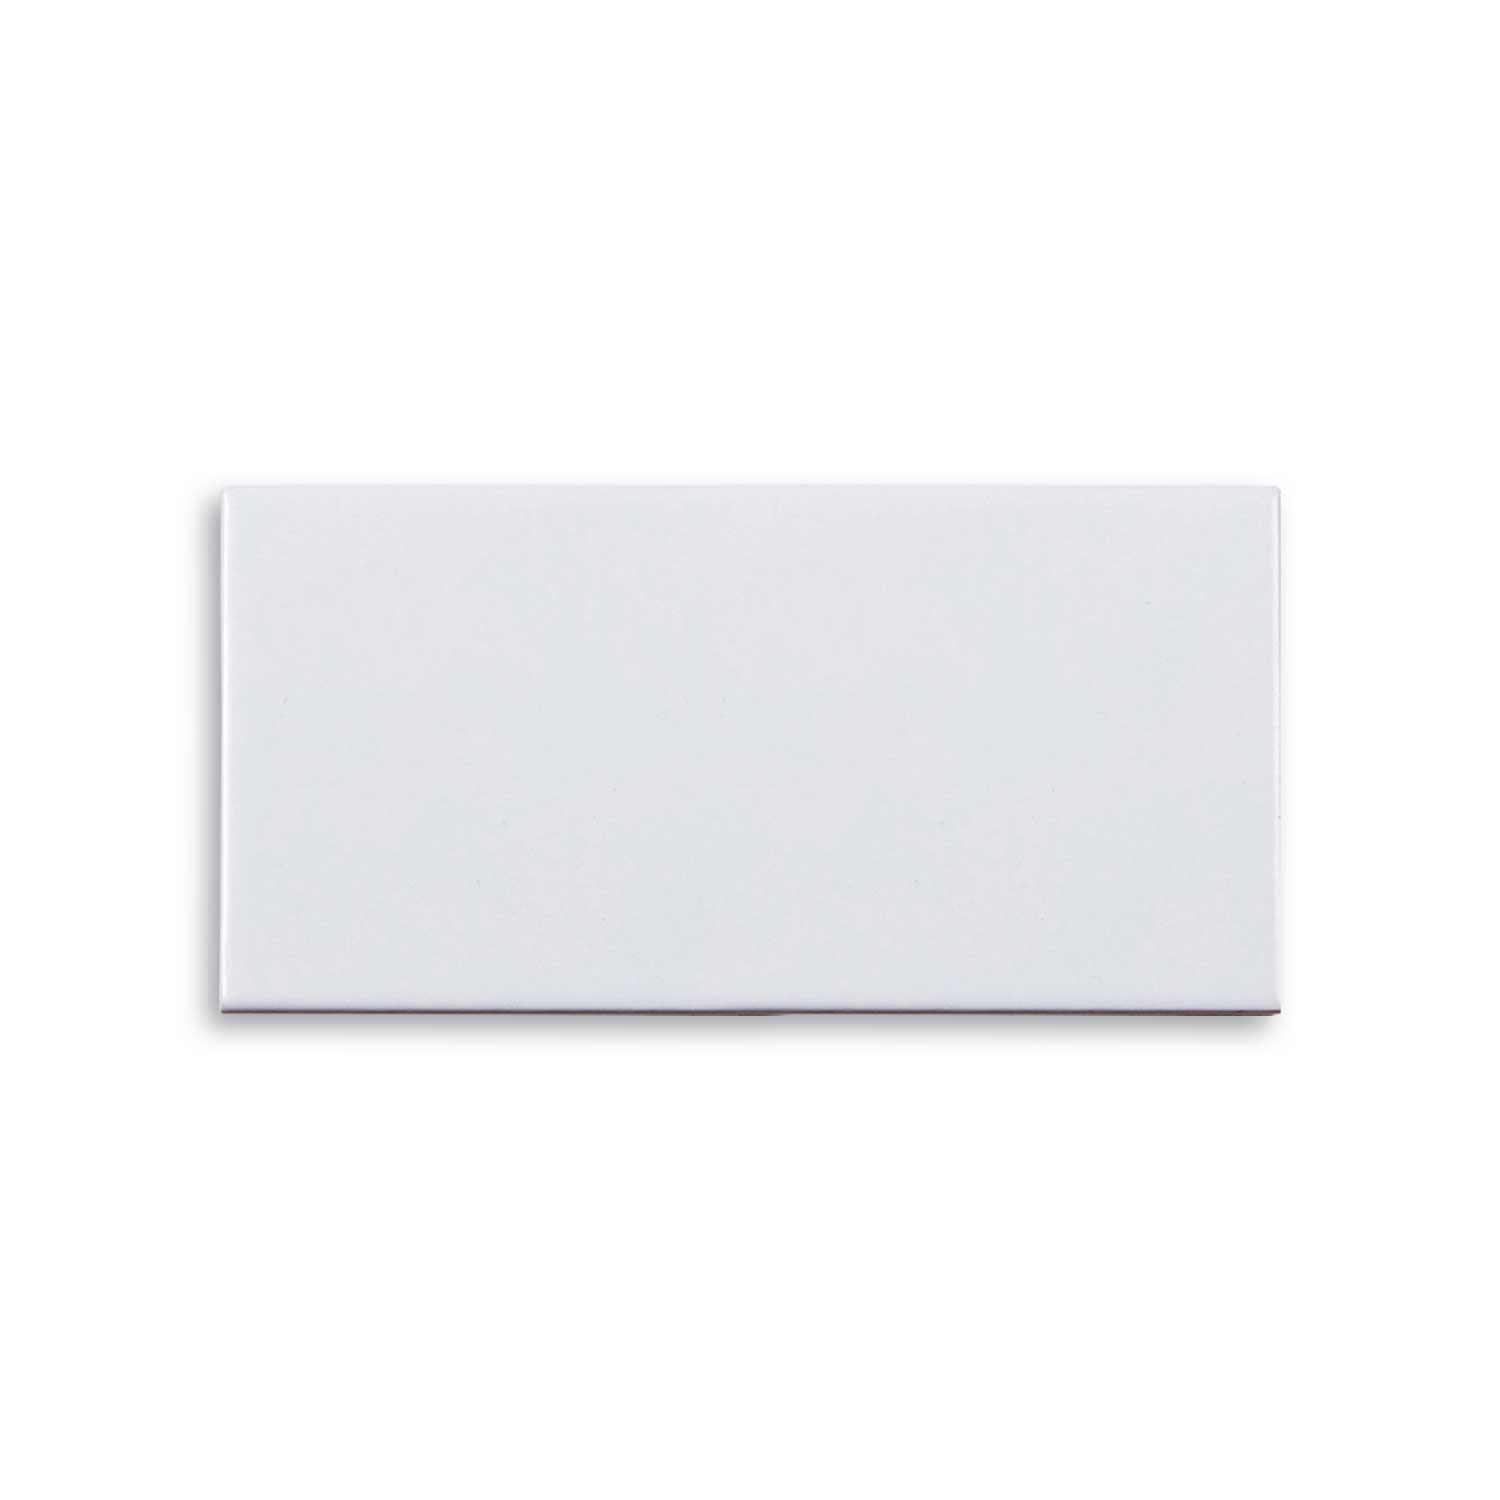 Classic Satin White Ceramic Wall Tile Rectangle 100x200mm